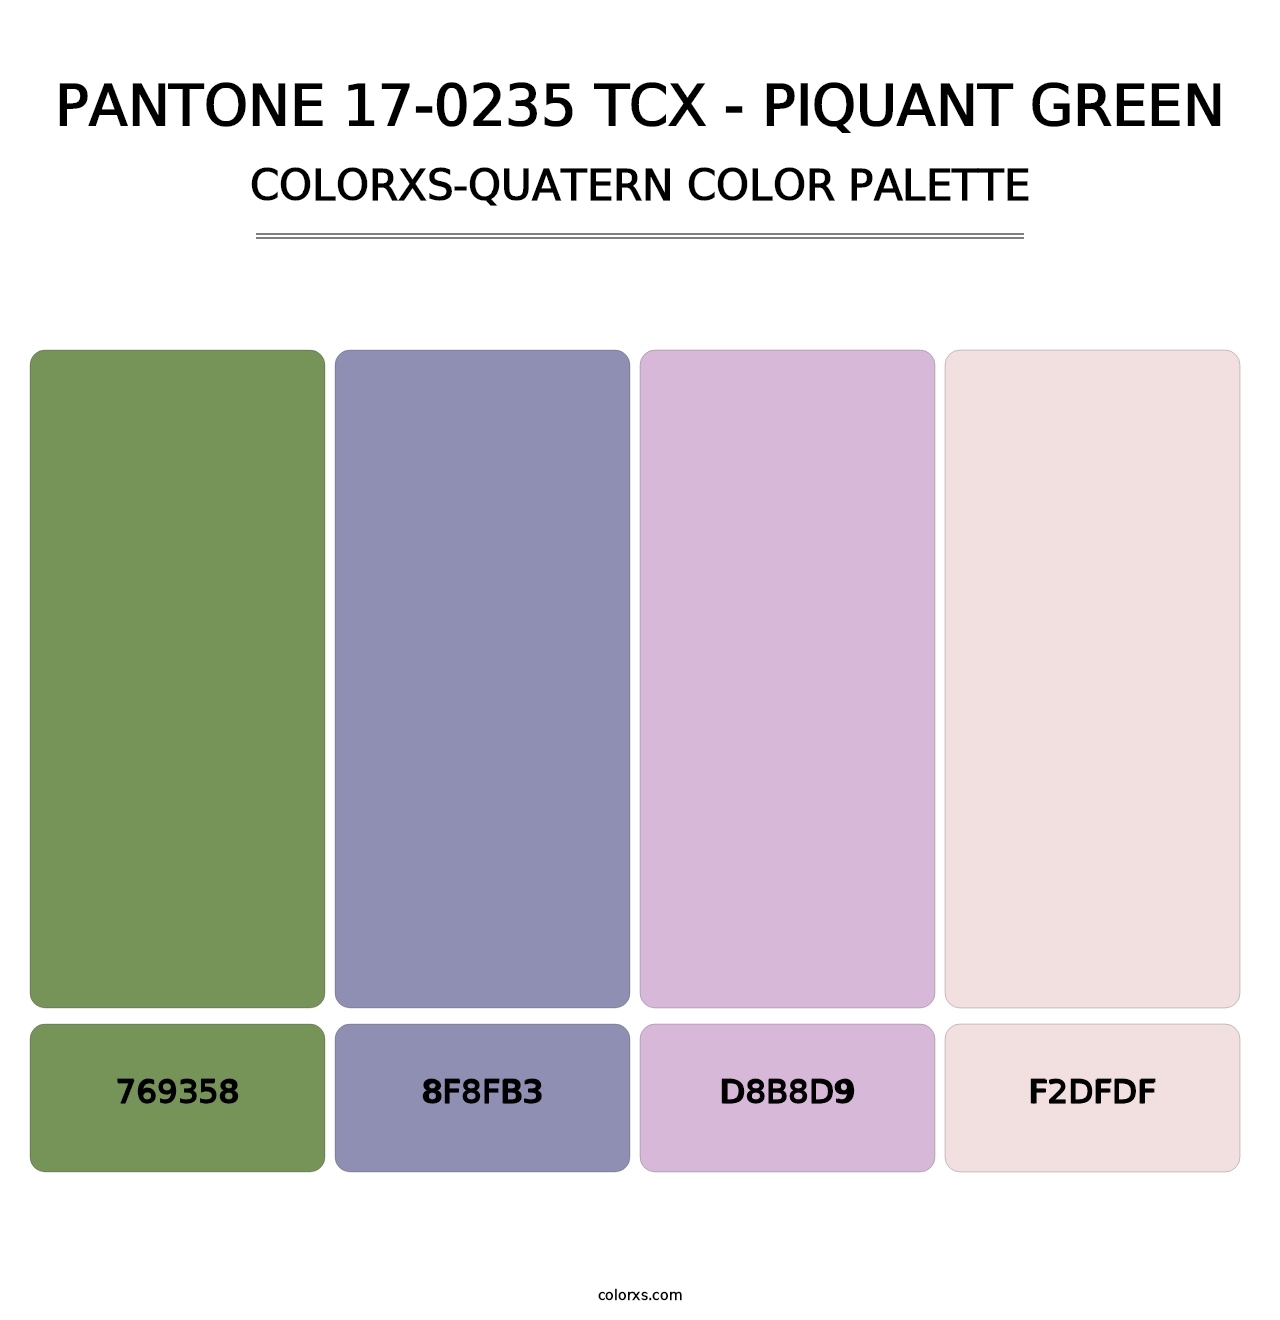 PANTONE 17-0235 TCX - Piquant Green - Colorxs Quatern Palette